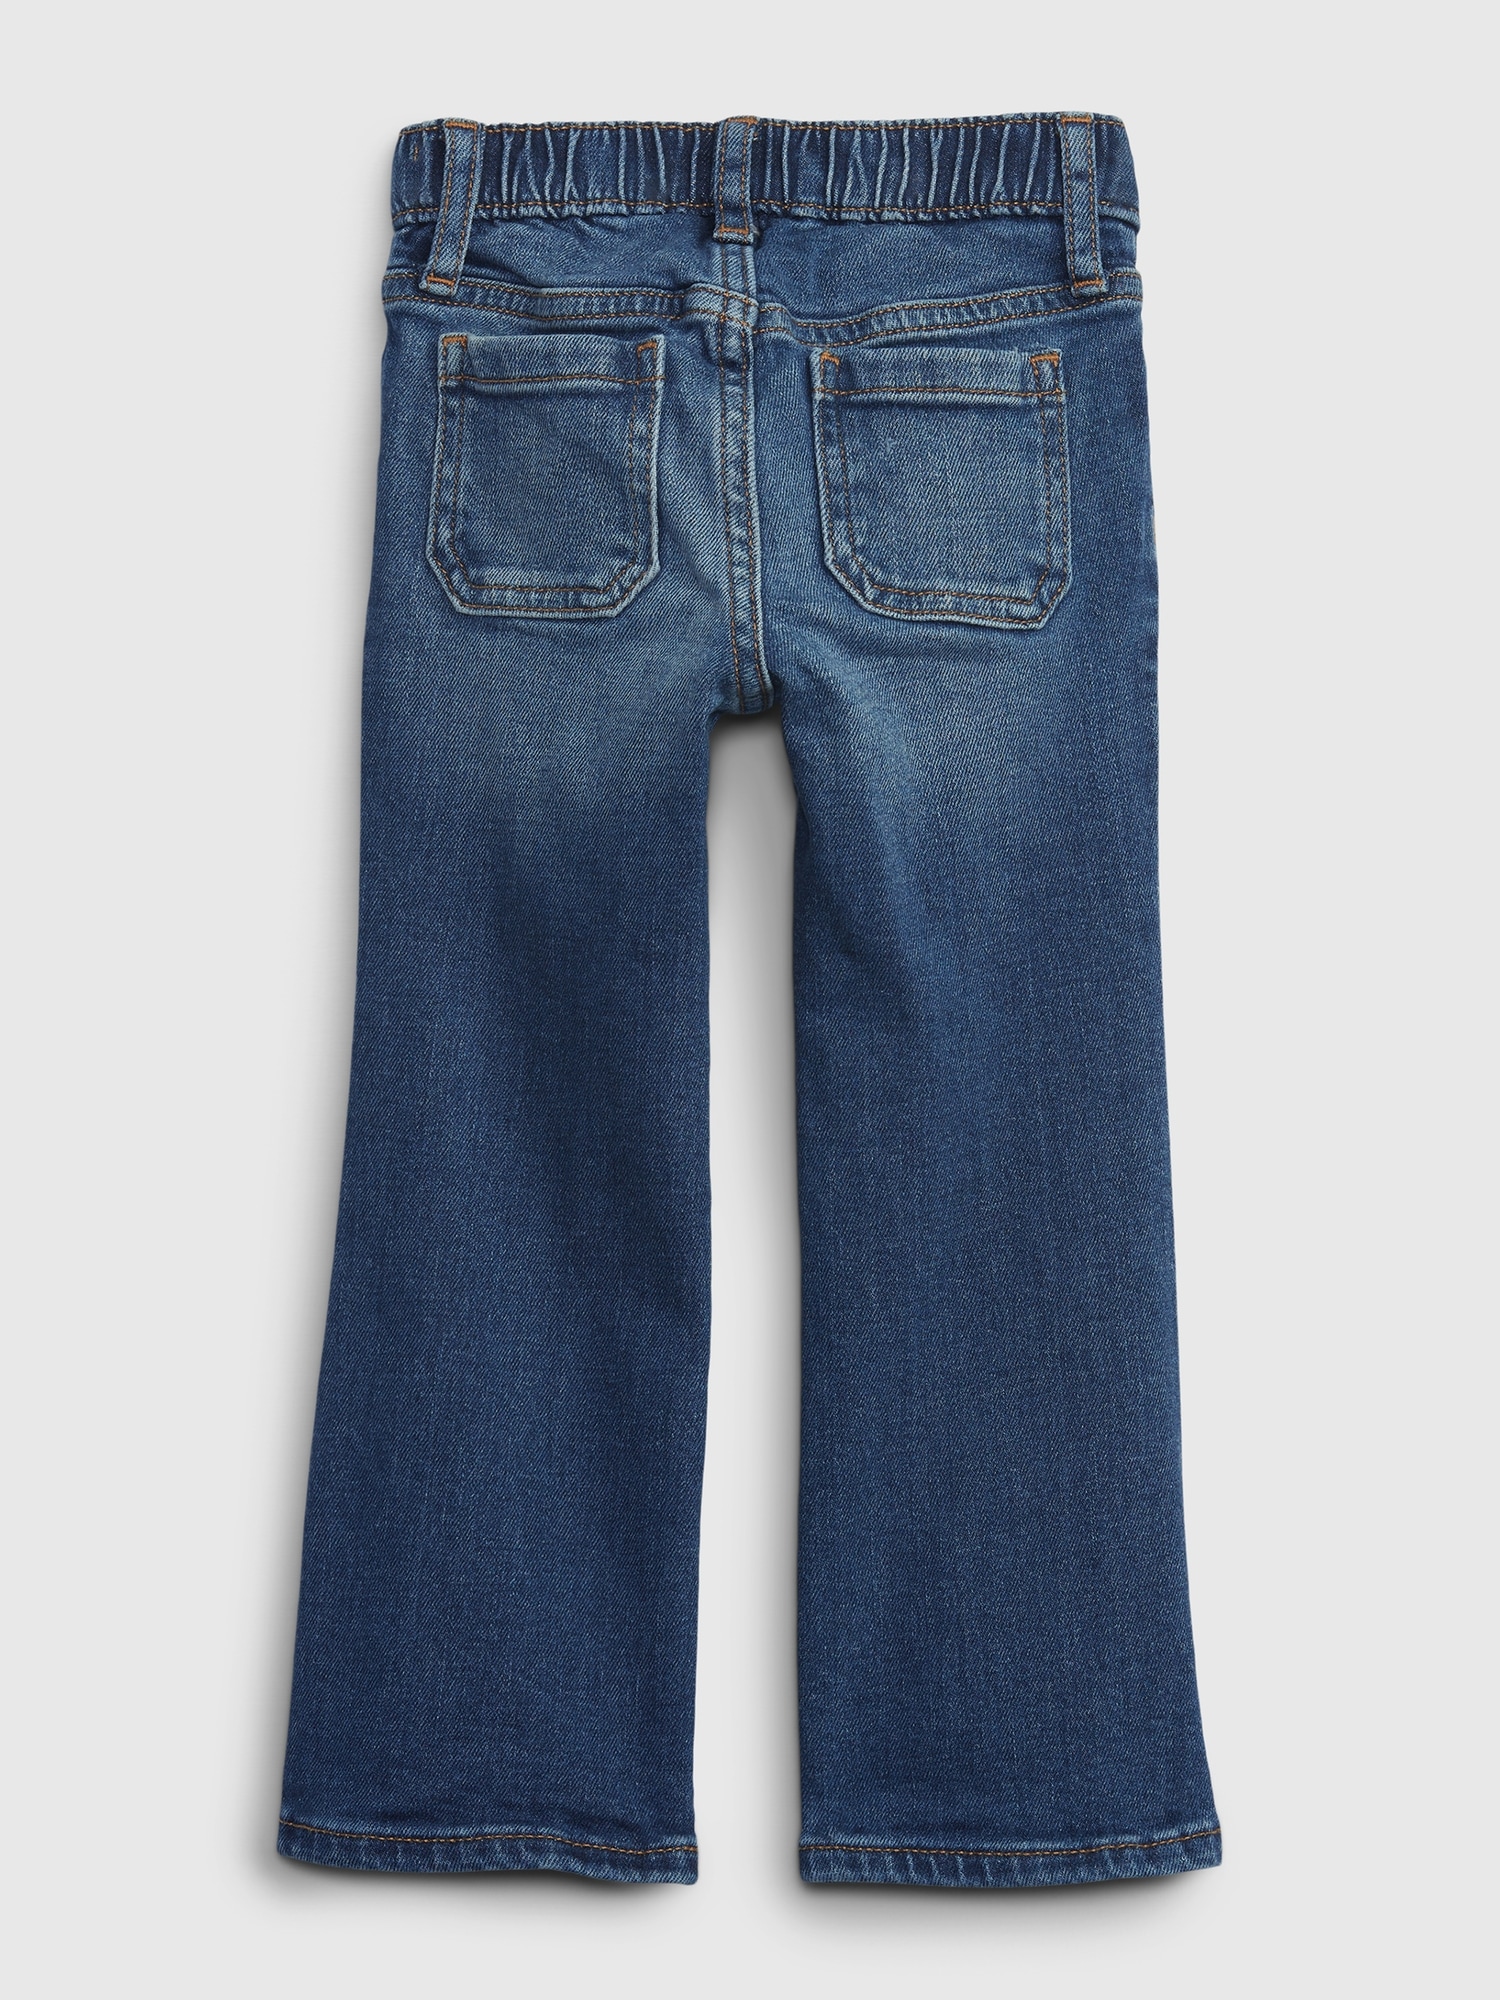 Gap Denim Flare Jeans